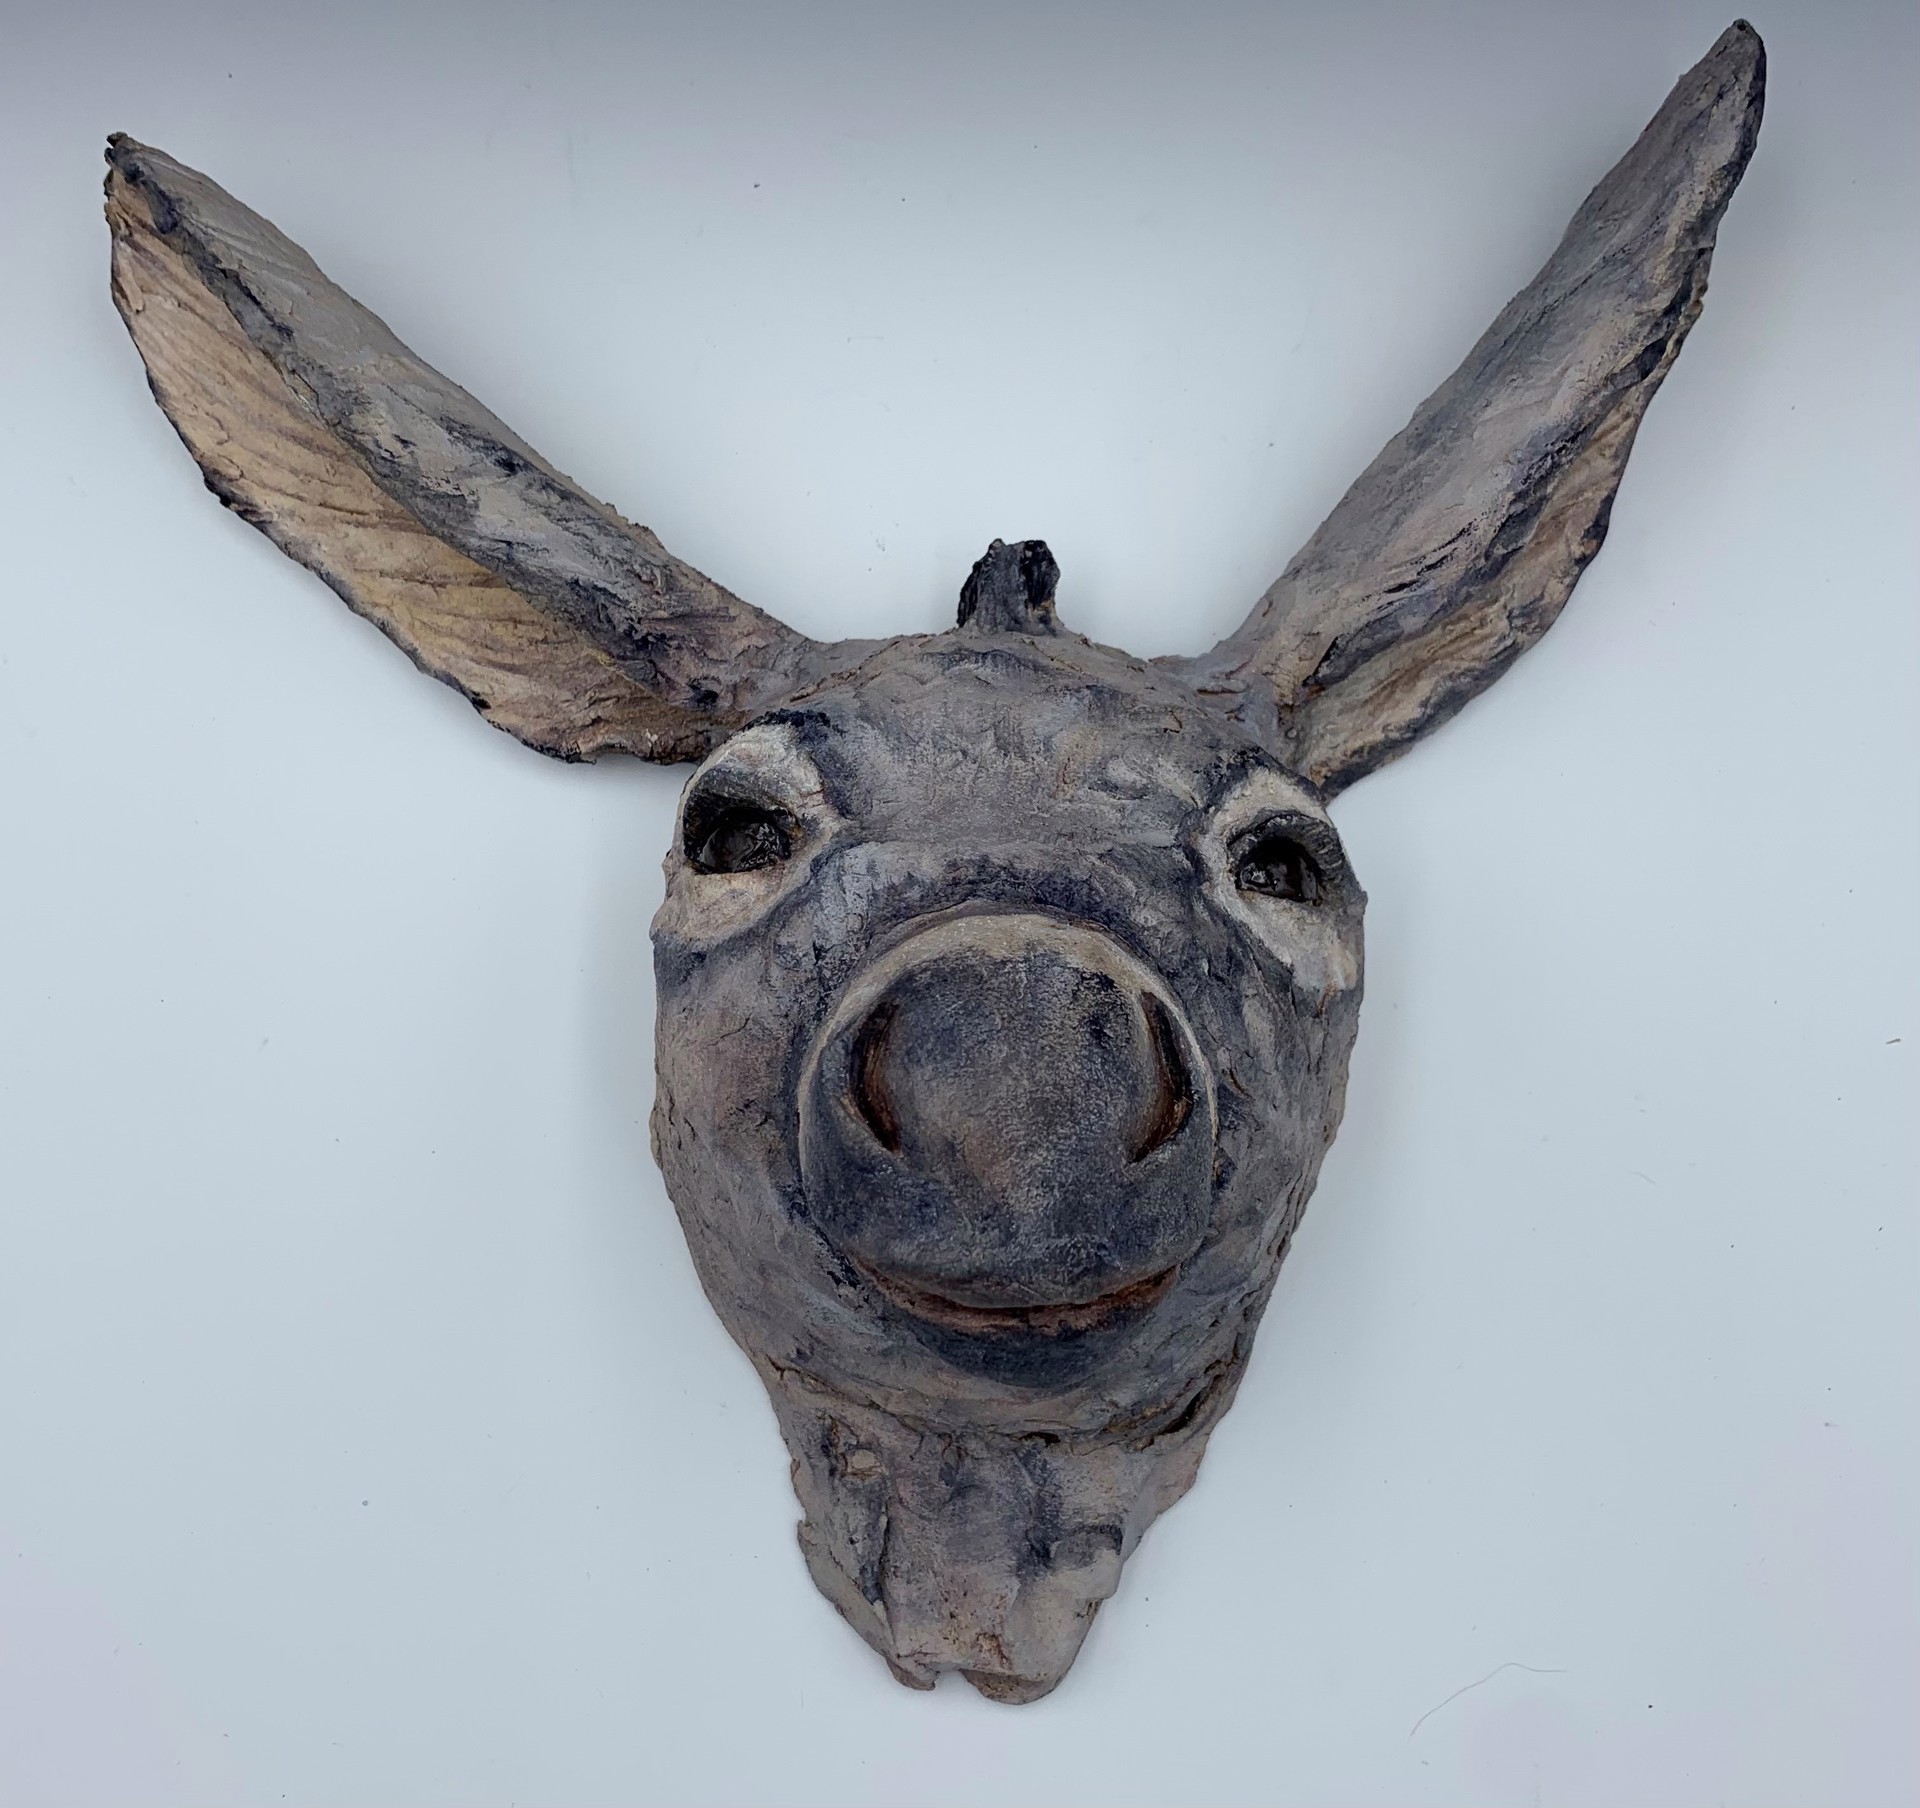 My Beloved (Donkey) by Julie Kradel